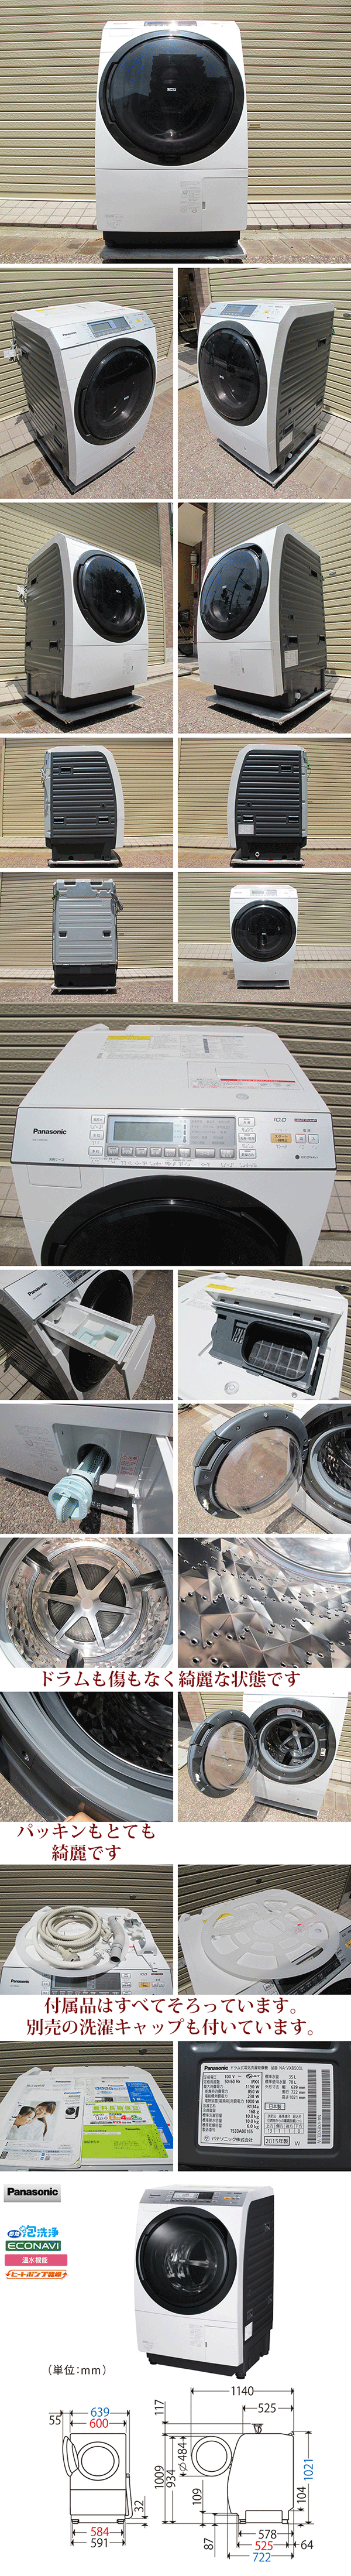 Panasonicのドラム式洗濯乾燥機 NA-VX8500Lを販売！いろいろな洗濯機を ...